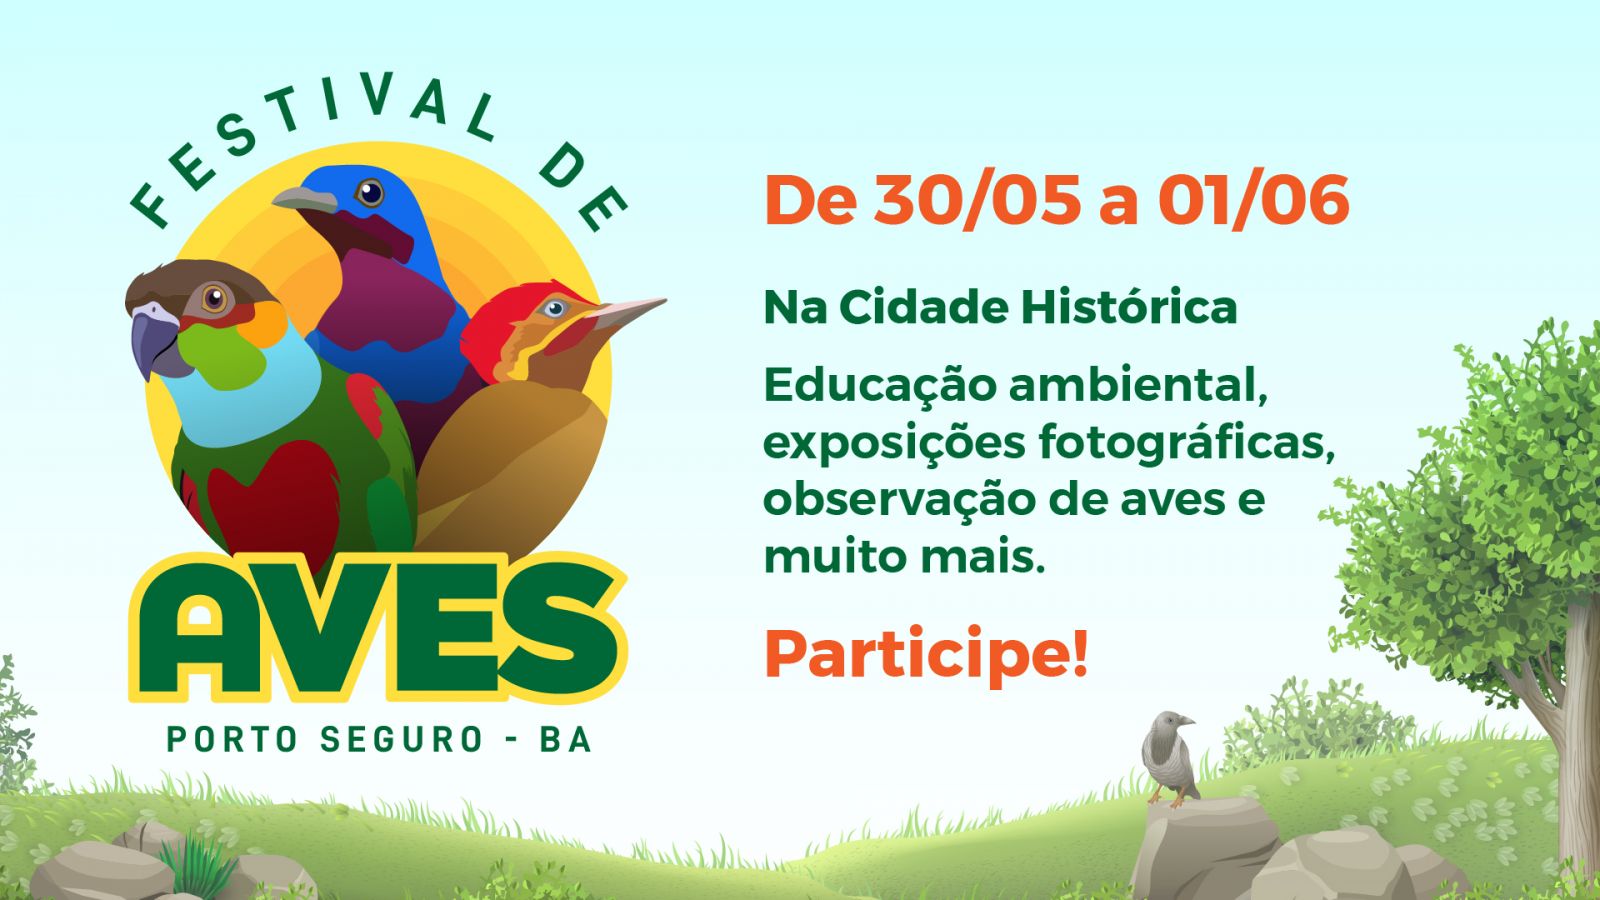 Porto Seguro sedia o 2 Festival de Aves de 30 de maio a 1 de Junho